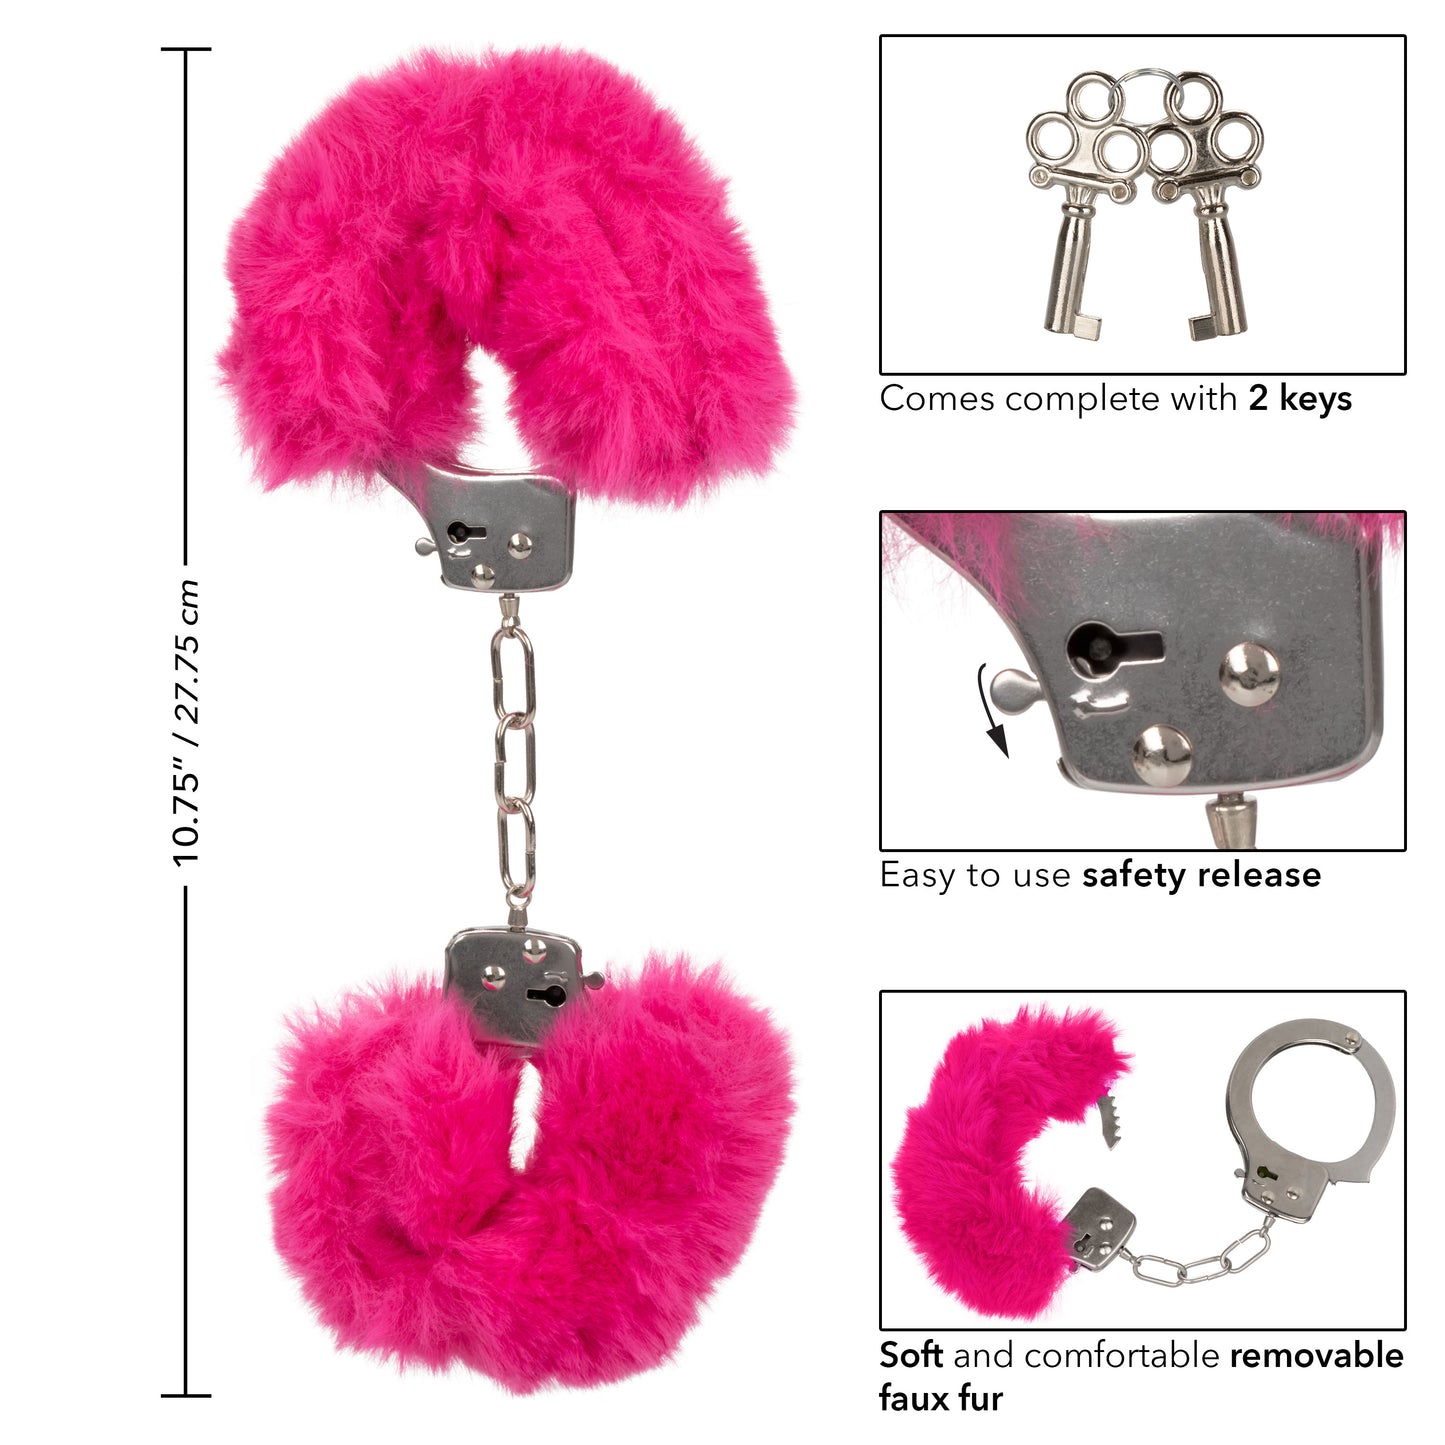 Ultra Fluffy Furry Cuffs - Pink